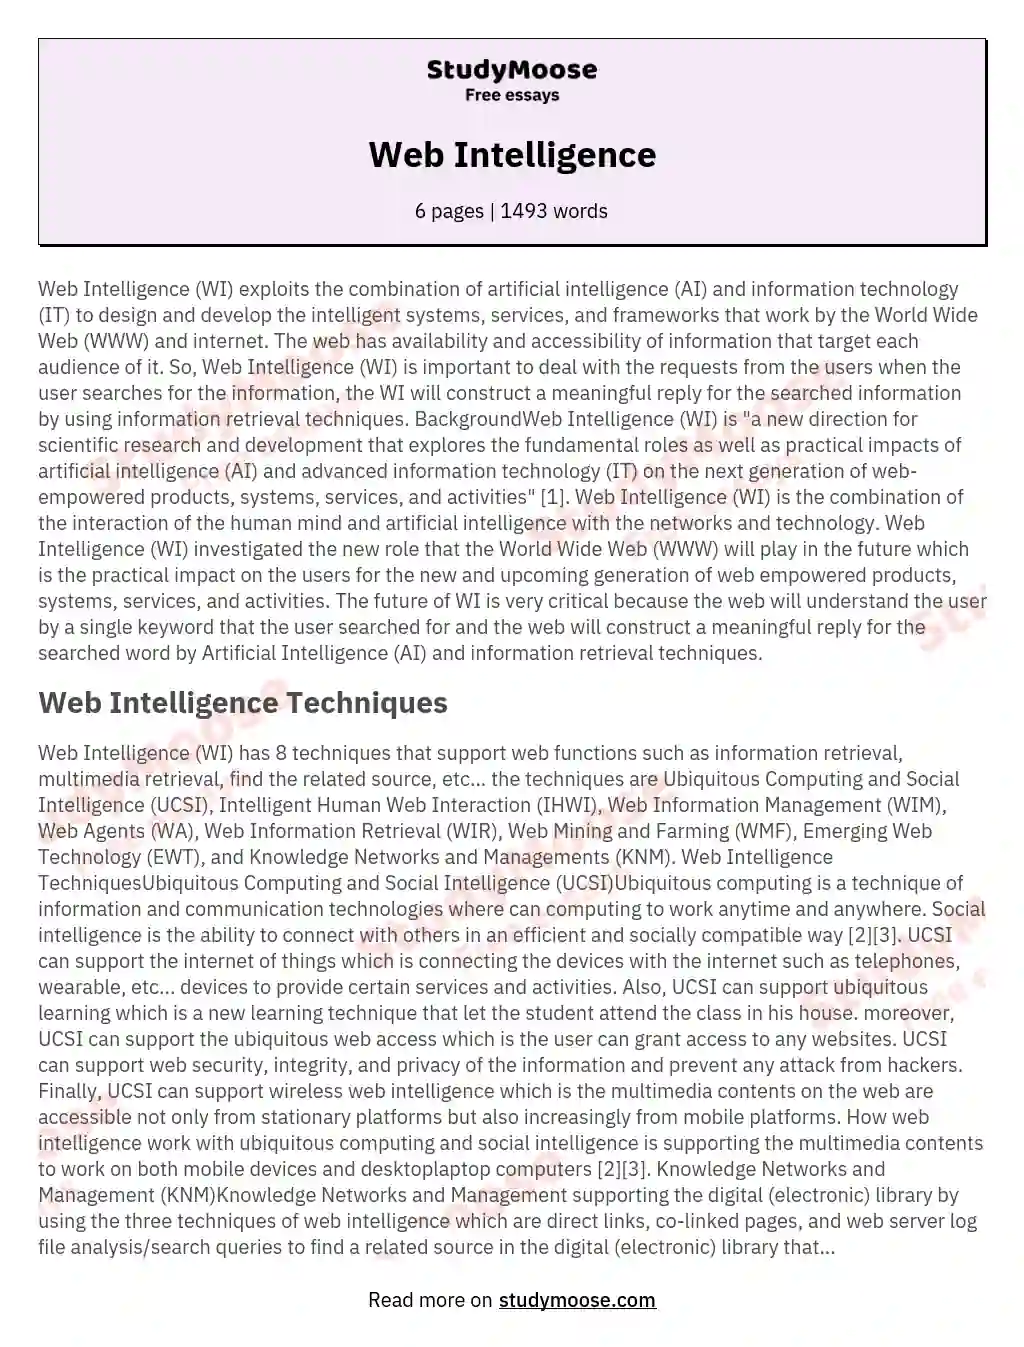 Web Intelligence essay